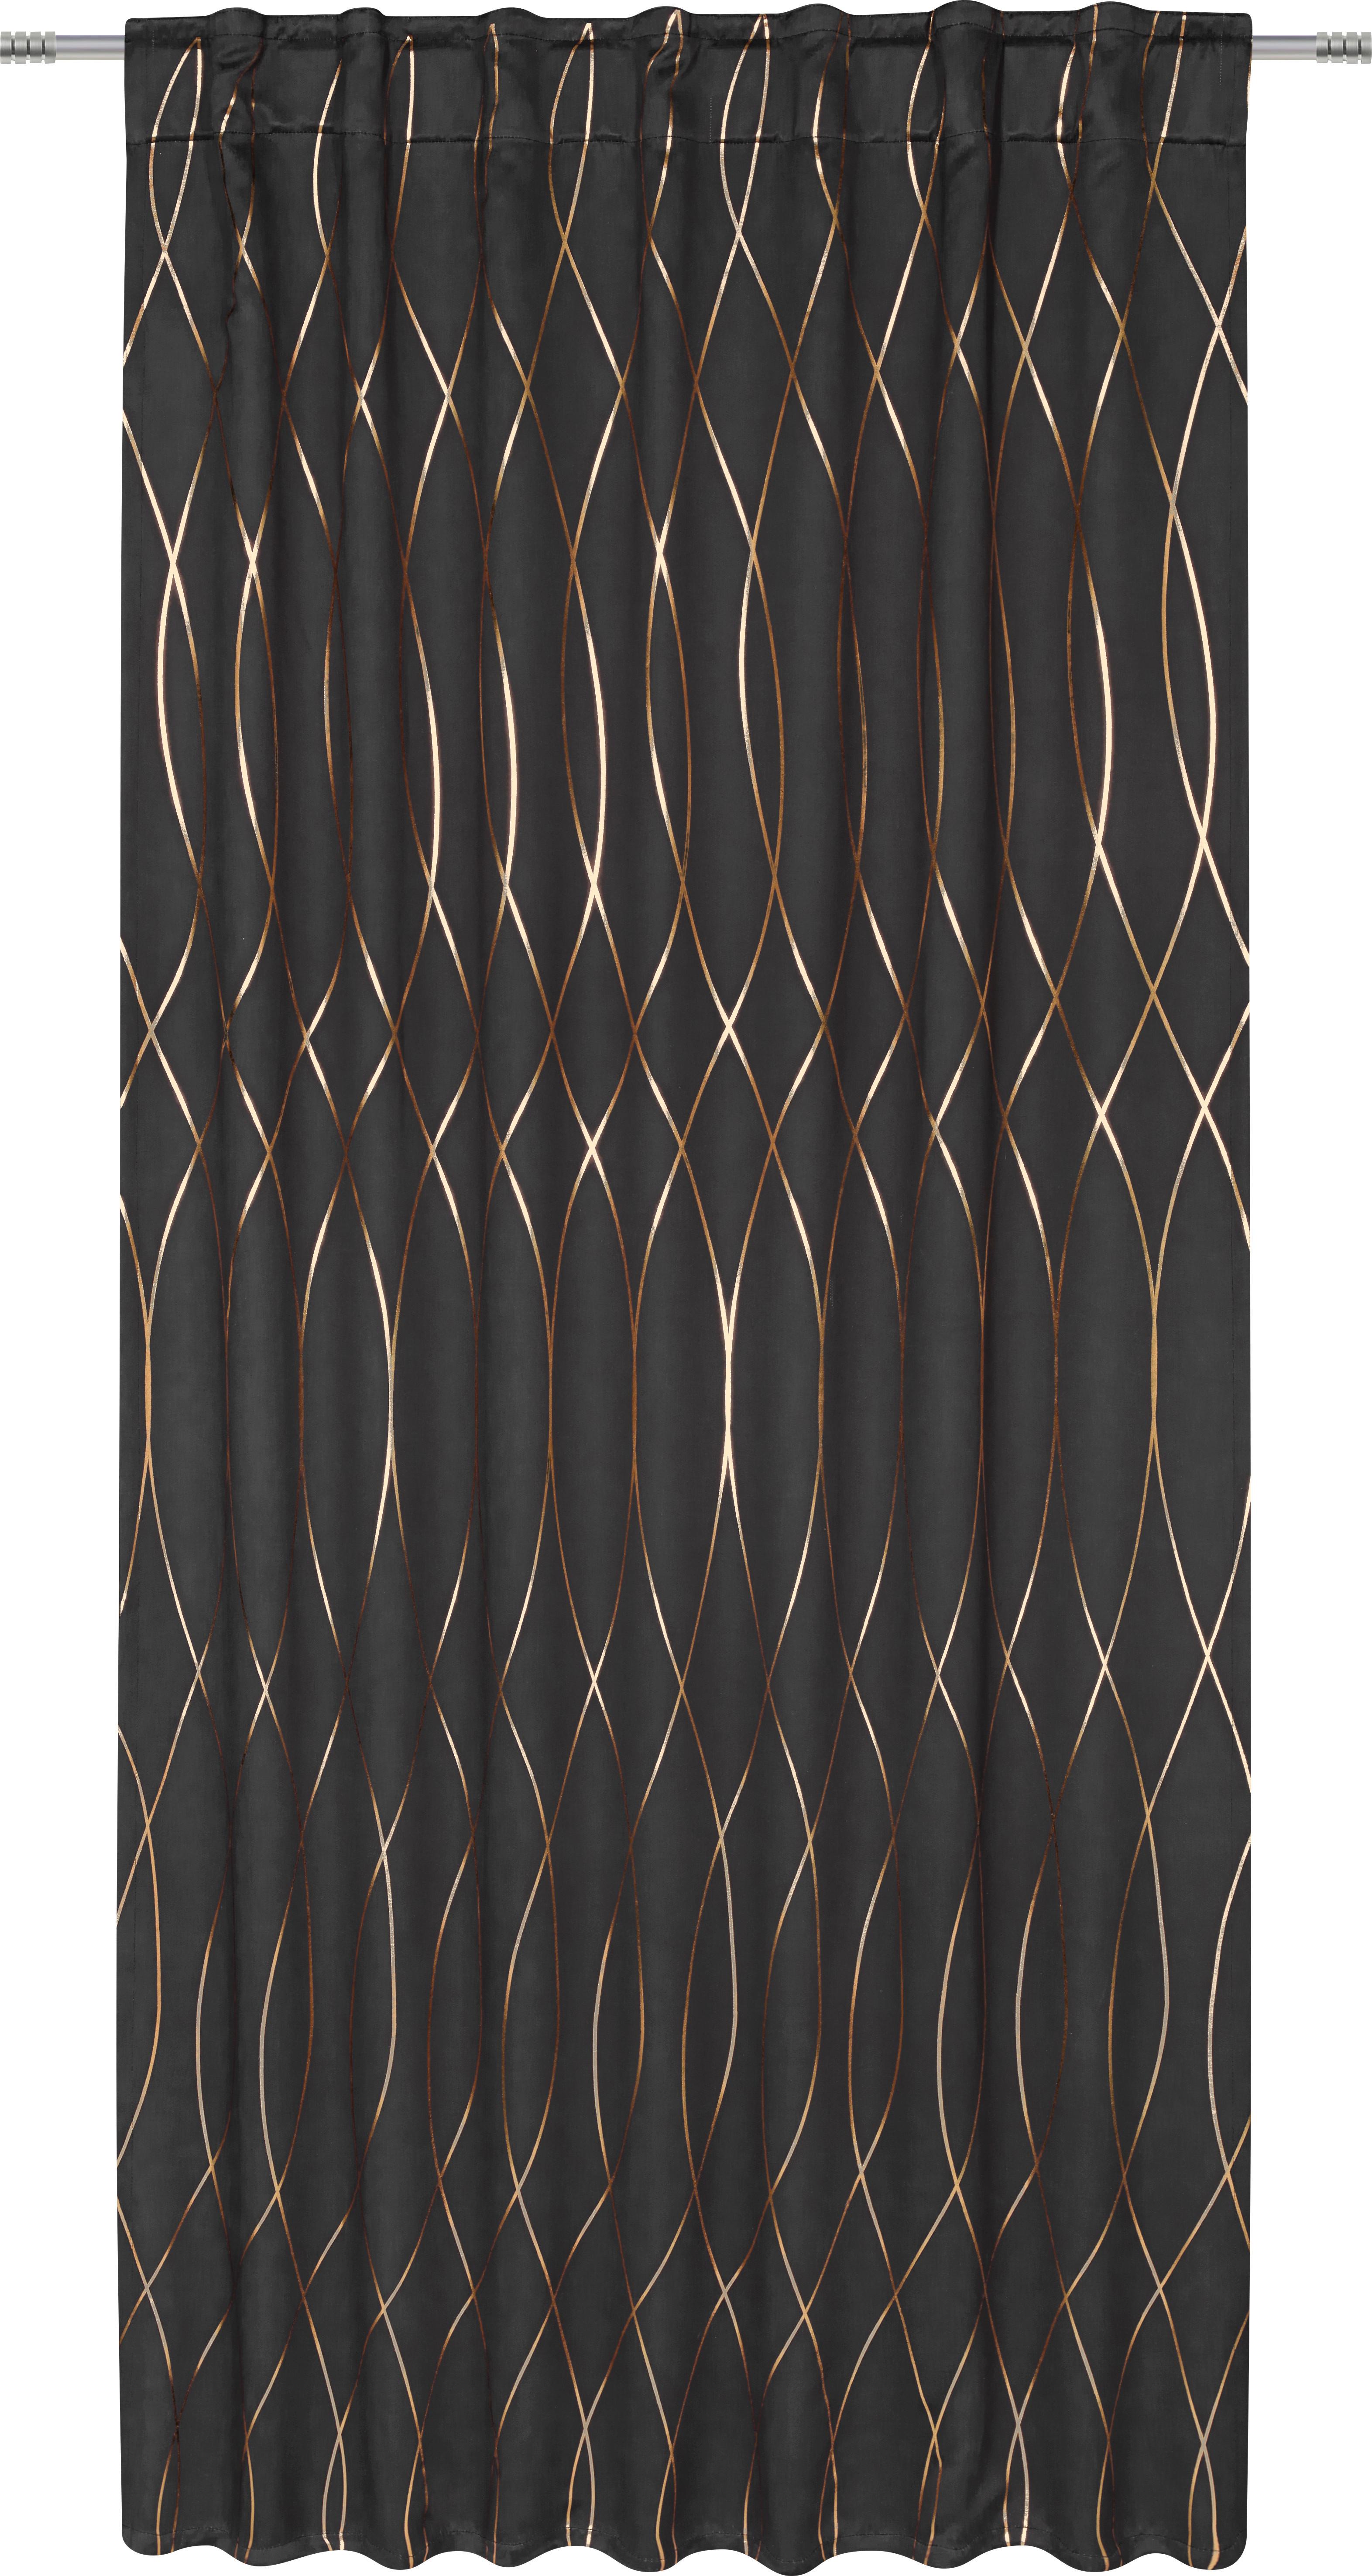 Zavjesa Za Zamračivanje Glamour -Akt- - bakrenaste boje/crna, Lifestyle, tekstil (140/245cm) - Modern Living